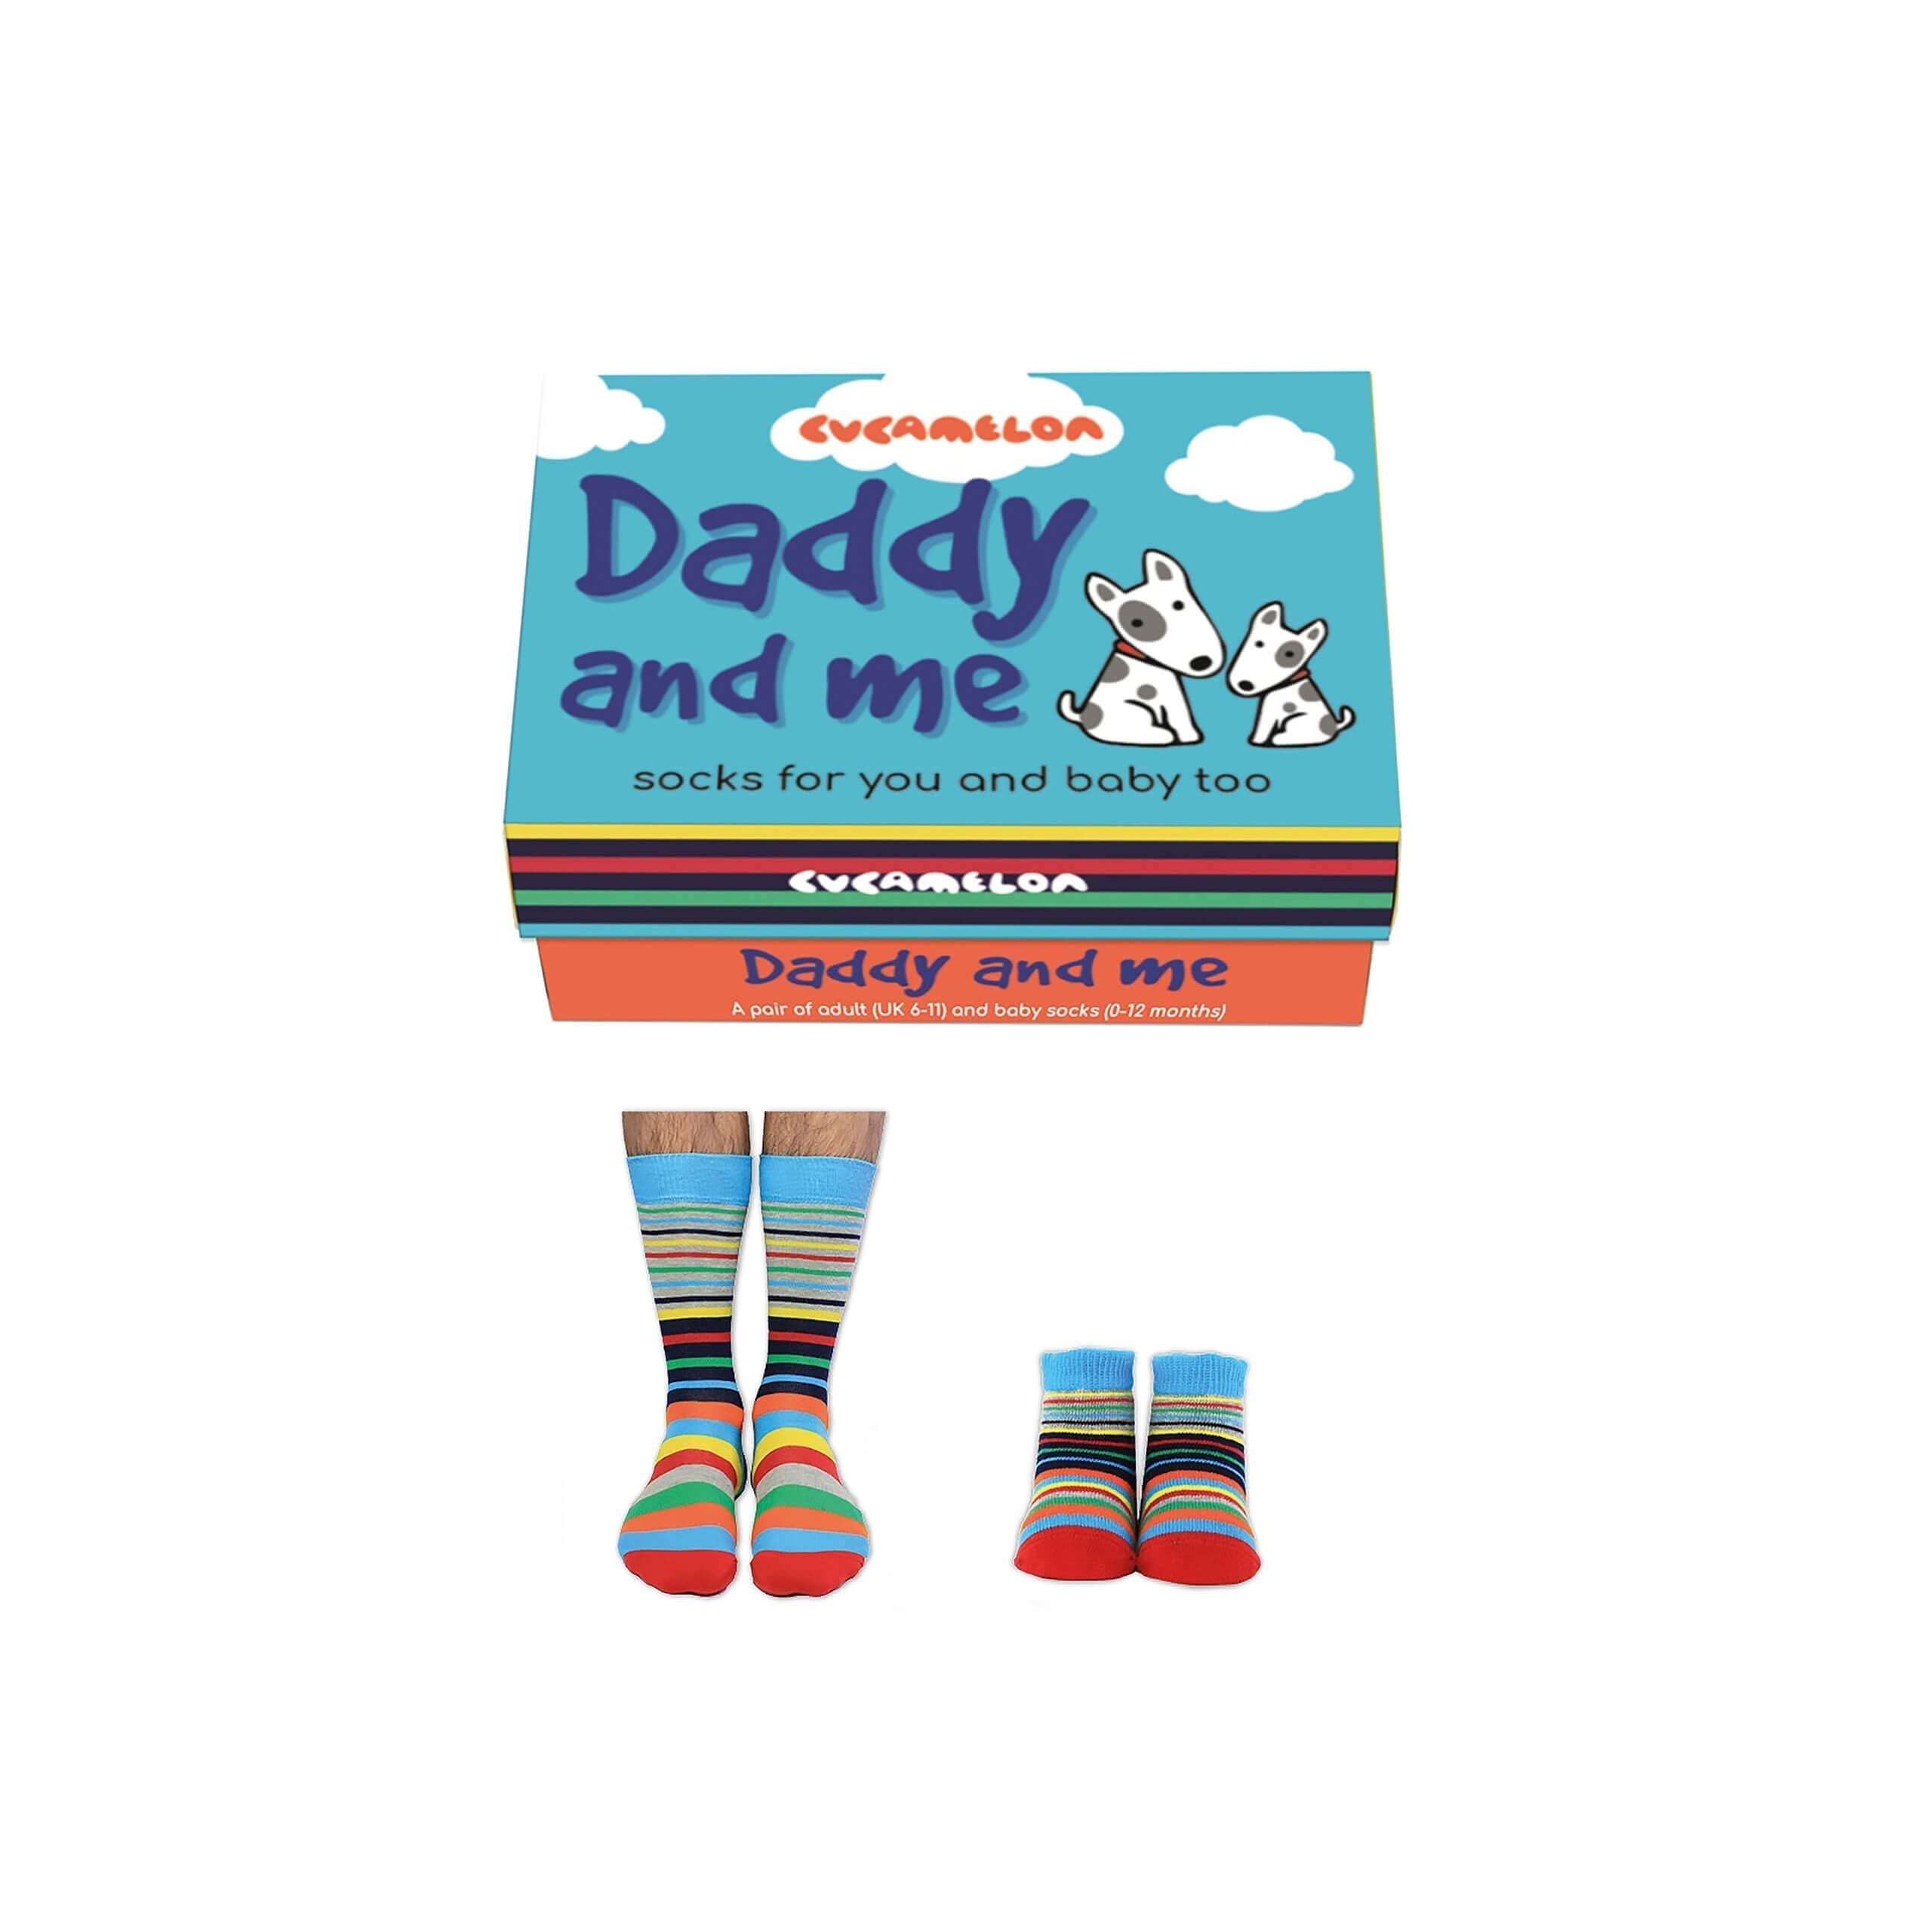 Cucamelon Mini Me Daddy And Me Socks Box